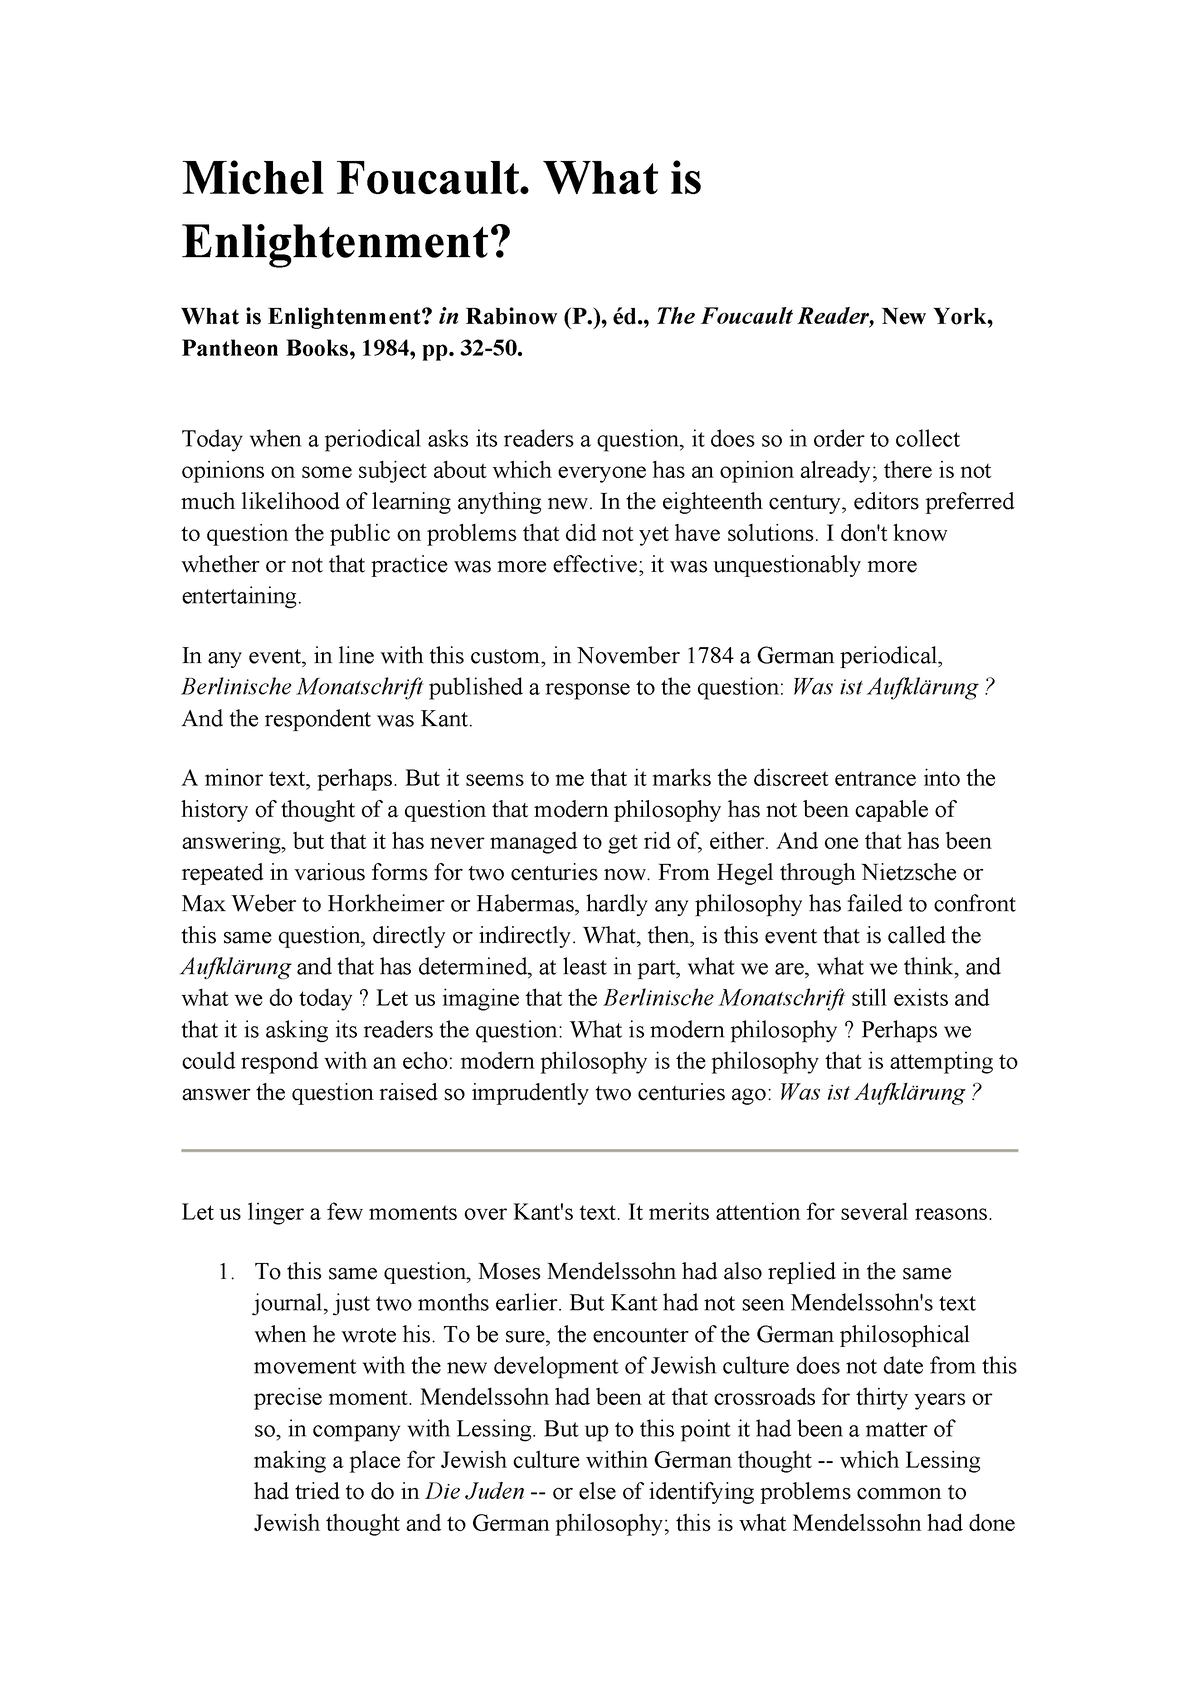 age of enlightenment essay pdf